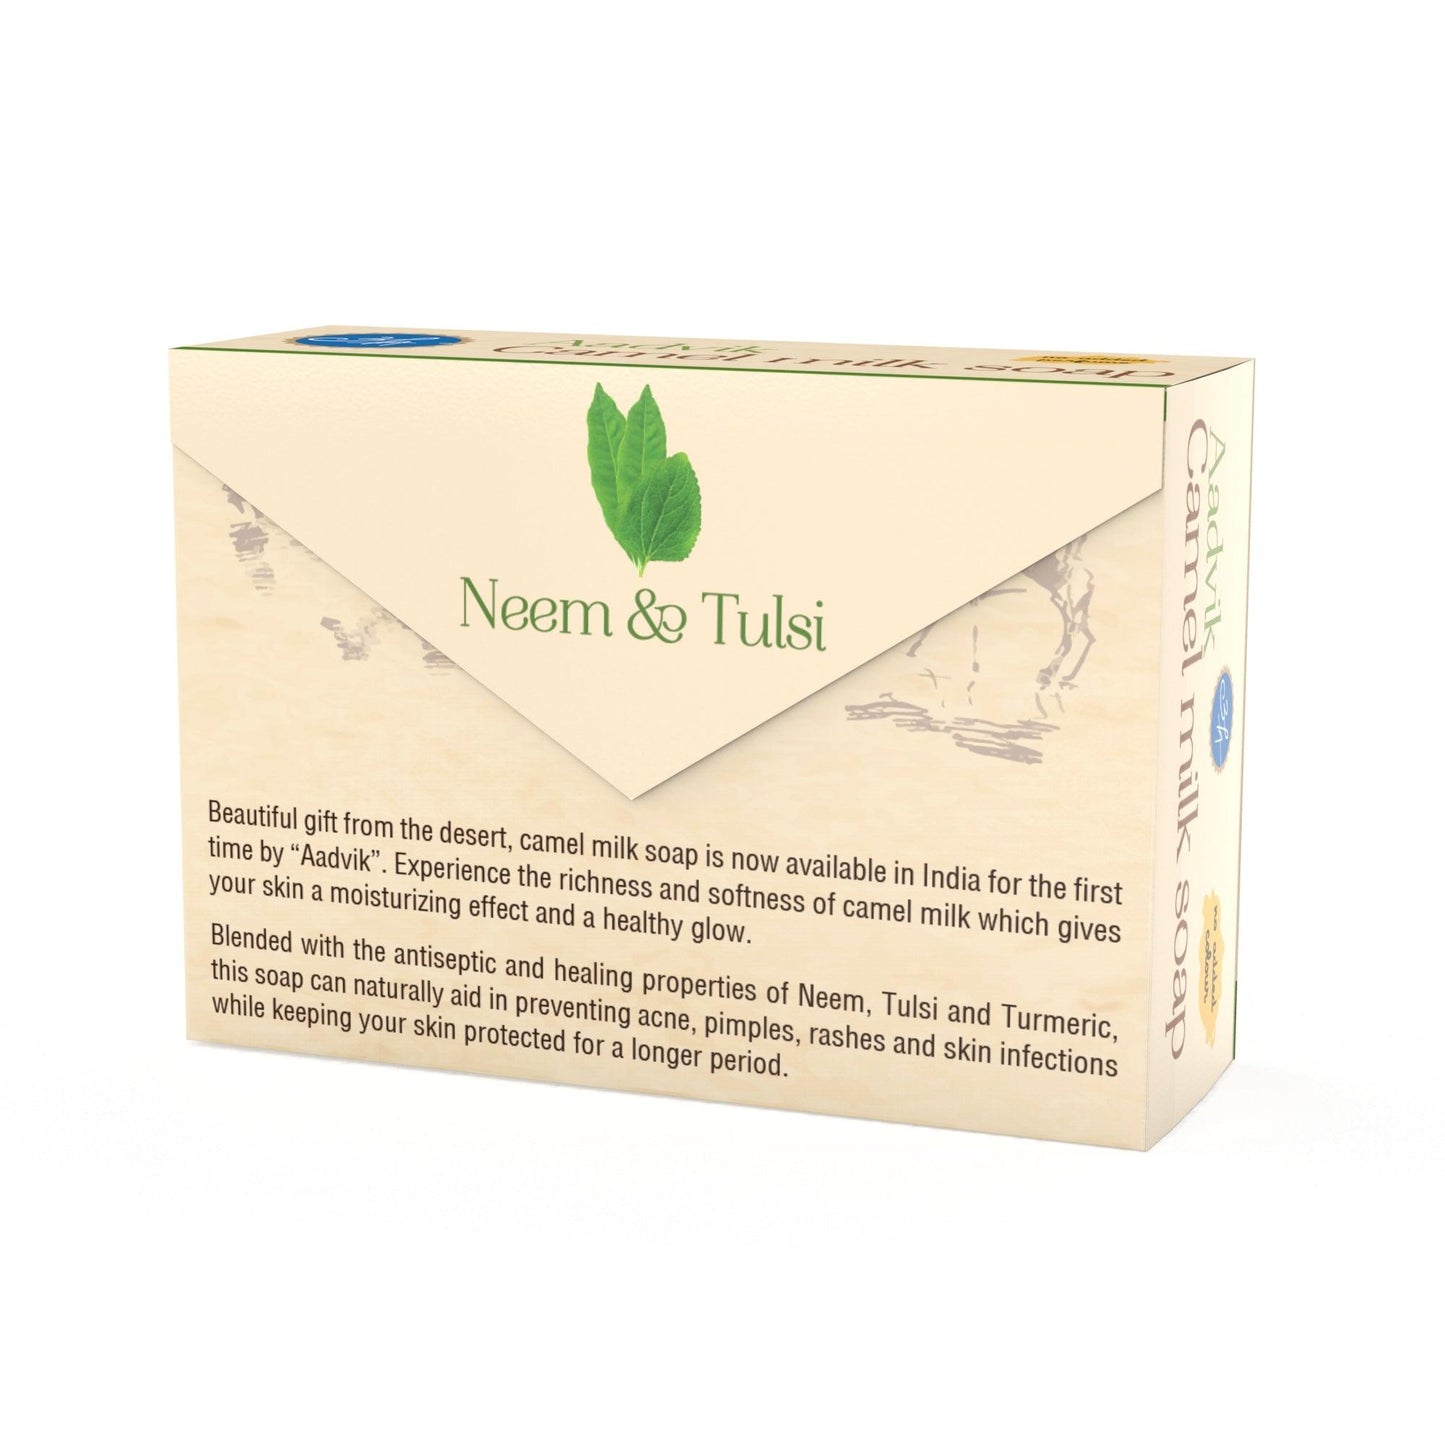 Camel Milk Soap । Neem & Tulsi | A Shark Tank Product - Aadvik Foods